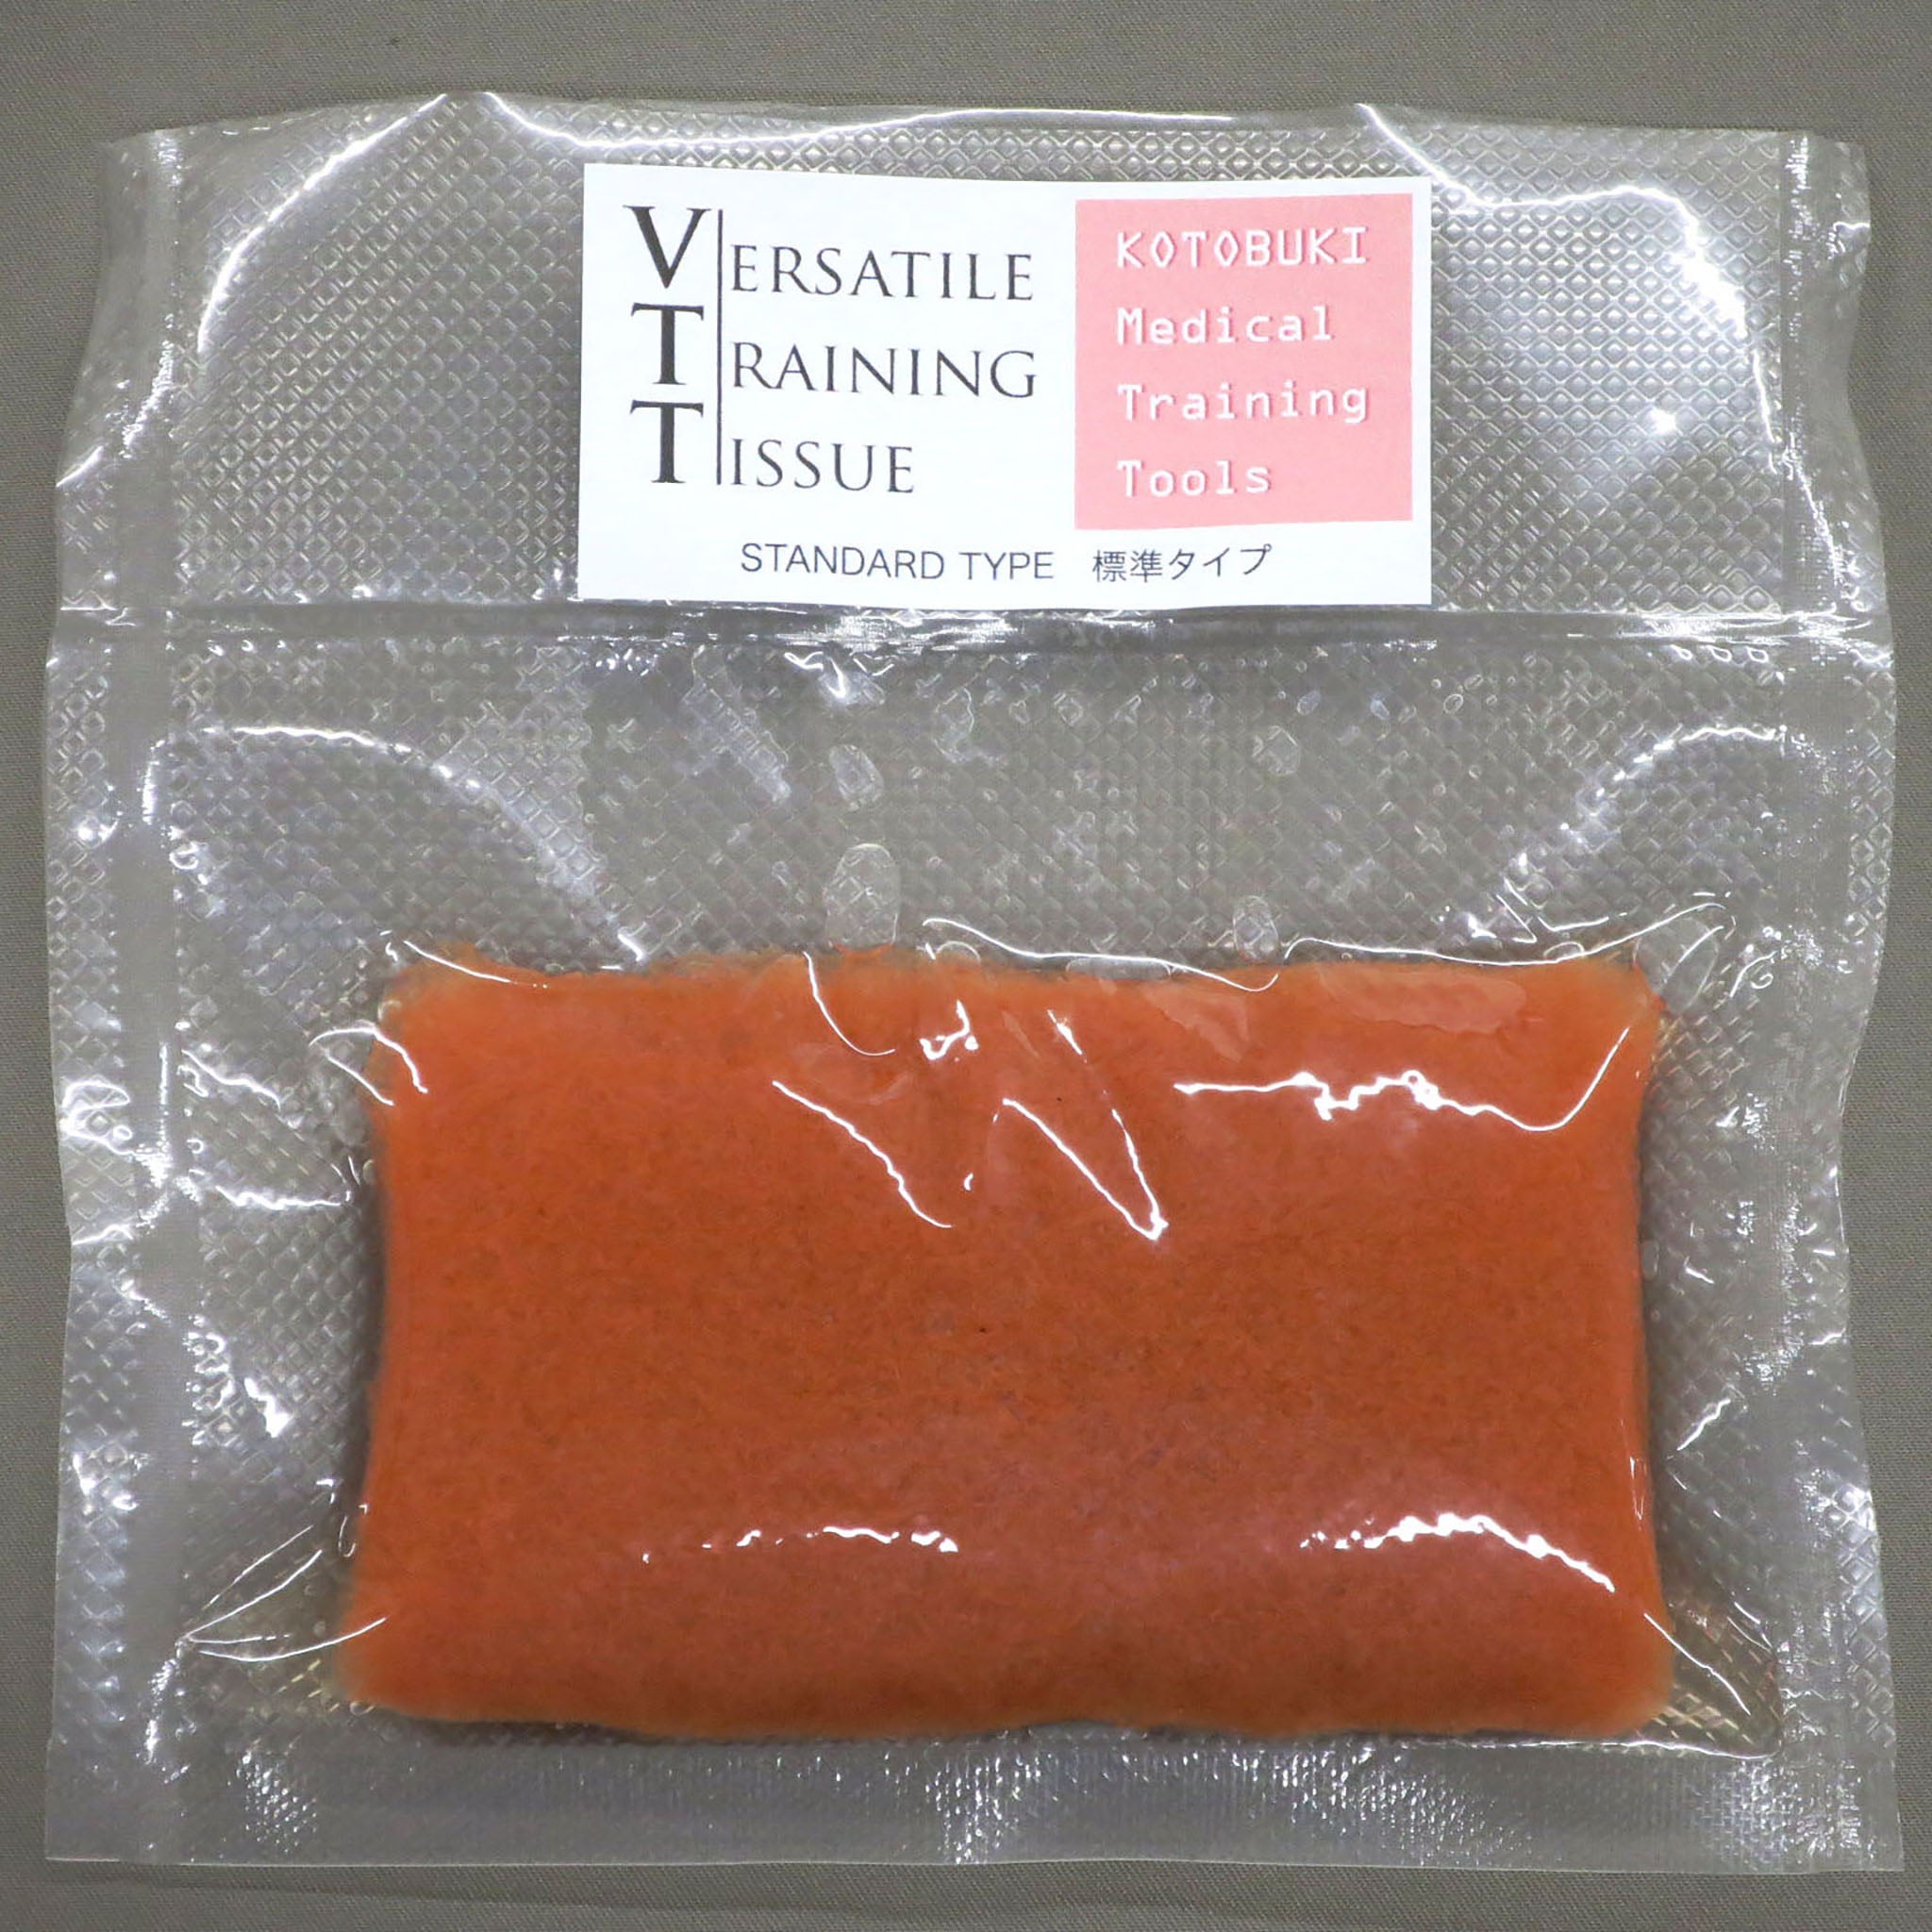 Vtt Versatile Training Tissue Standard Type By Kotobuki Medical